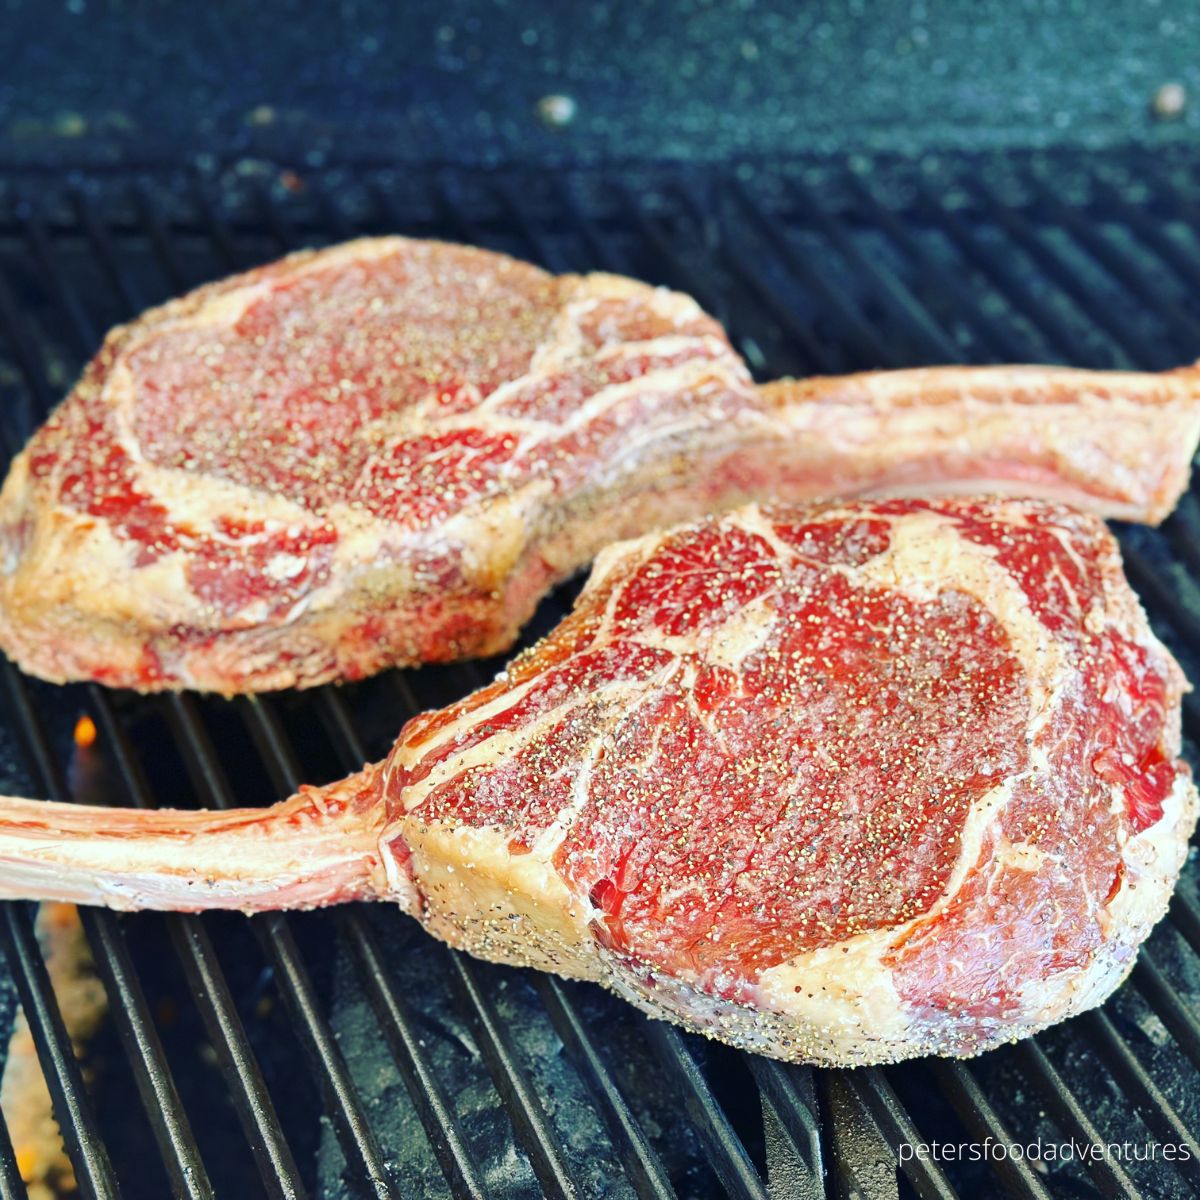 tomahawk steak on grill